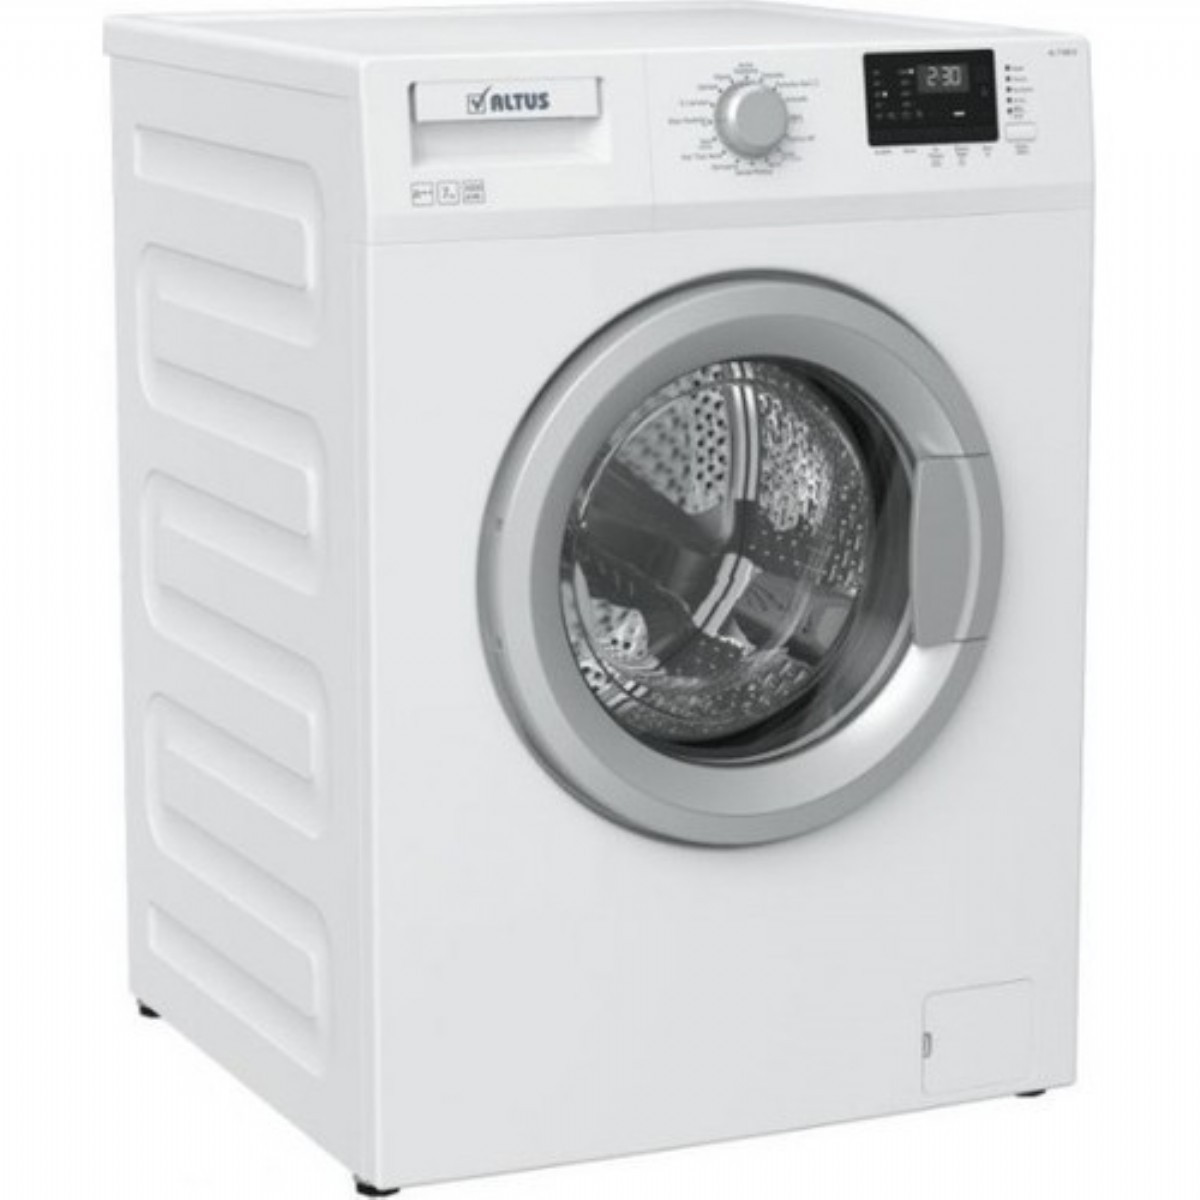 Çamaşır Makineleri | Altus AL 7103 MD 1000 Devir 7 kg Çamaşır Makinesi | AL-7103MD | Altus AL 7103 MD 7 kg 1000 Devir Çamaşır Makinesi, Altus AL 7103 D, Altus  7 kg 1000 Devir Çamaşır Makinesi, 7 kg çamaşır makinesi en ucuz, 7 kilo makine | 